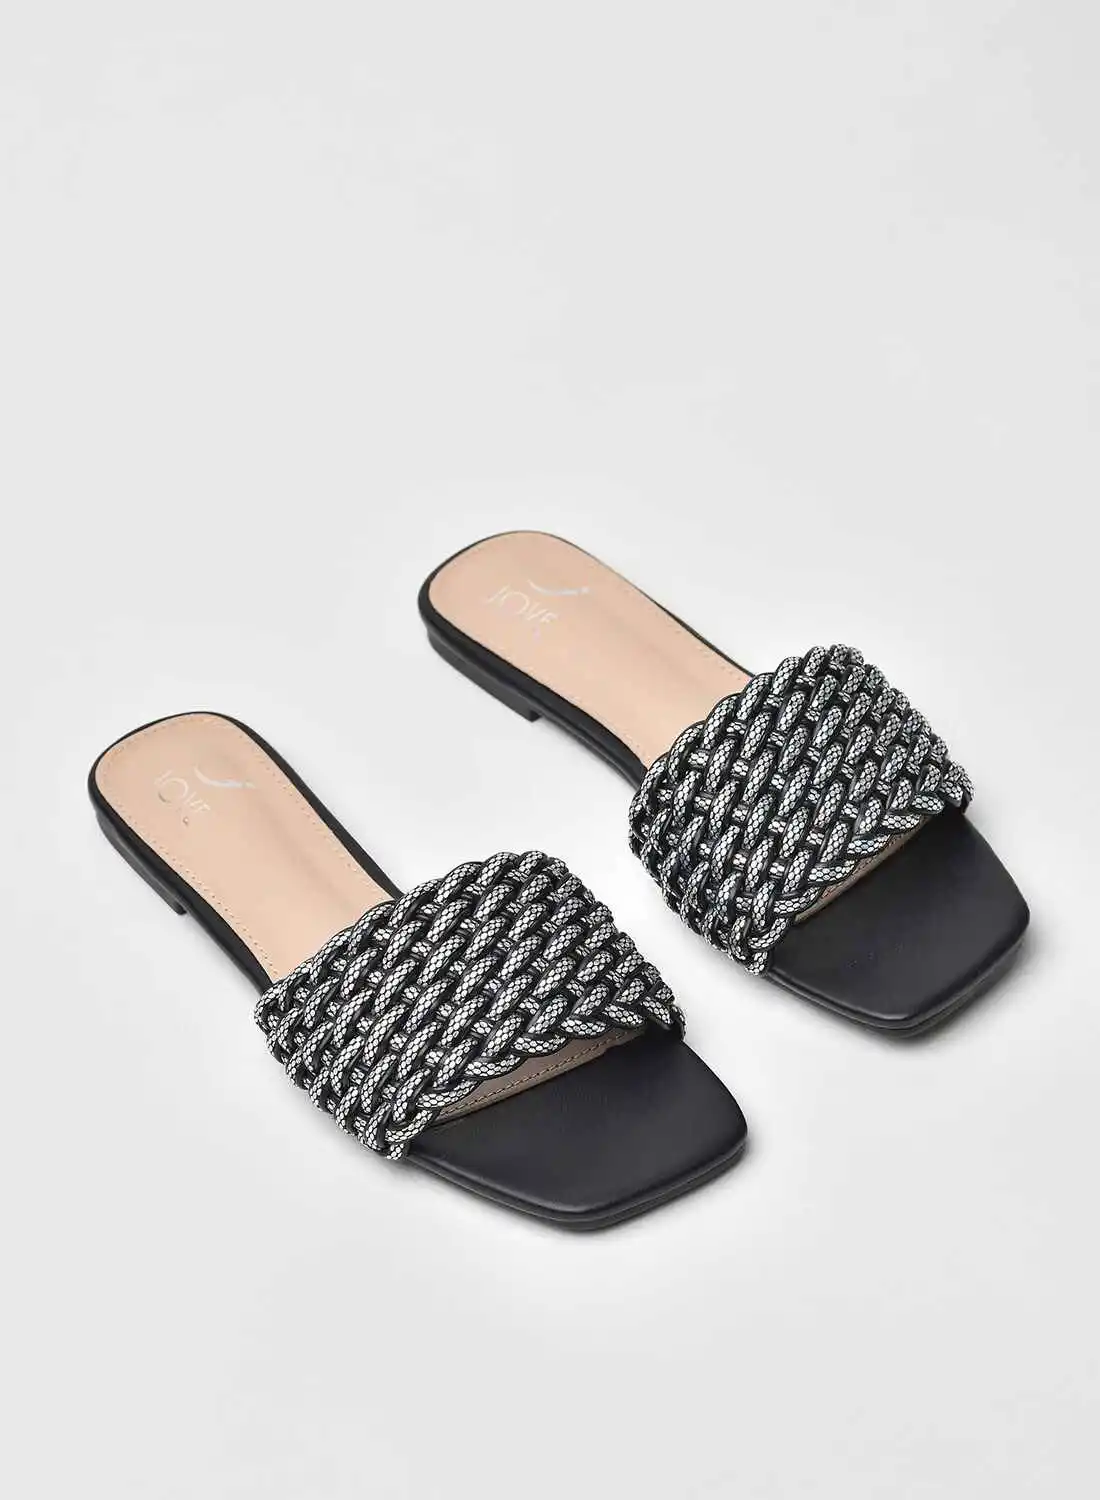 Jove Stylish Elegant Flat Sandals Black/White